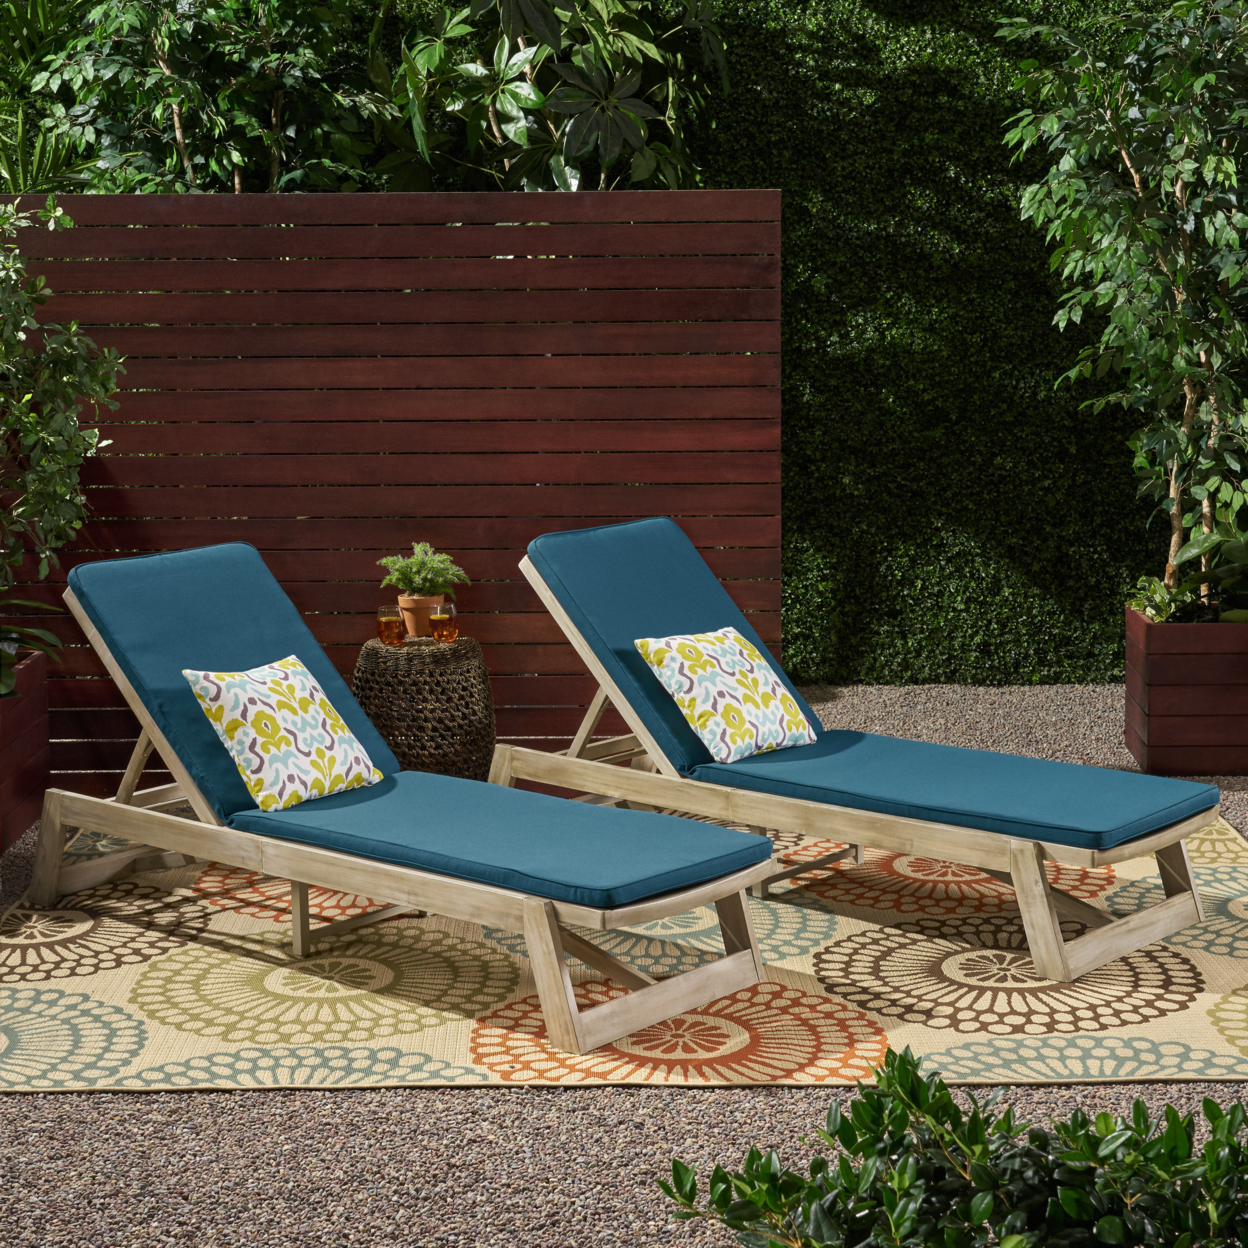 Tina Outdoor Acacia Wood Chaise Lounge And Cushion Sets (Set Of 2) - Light Gray Wash, Gray, Blue